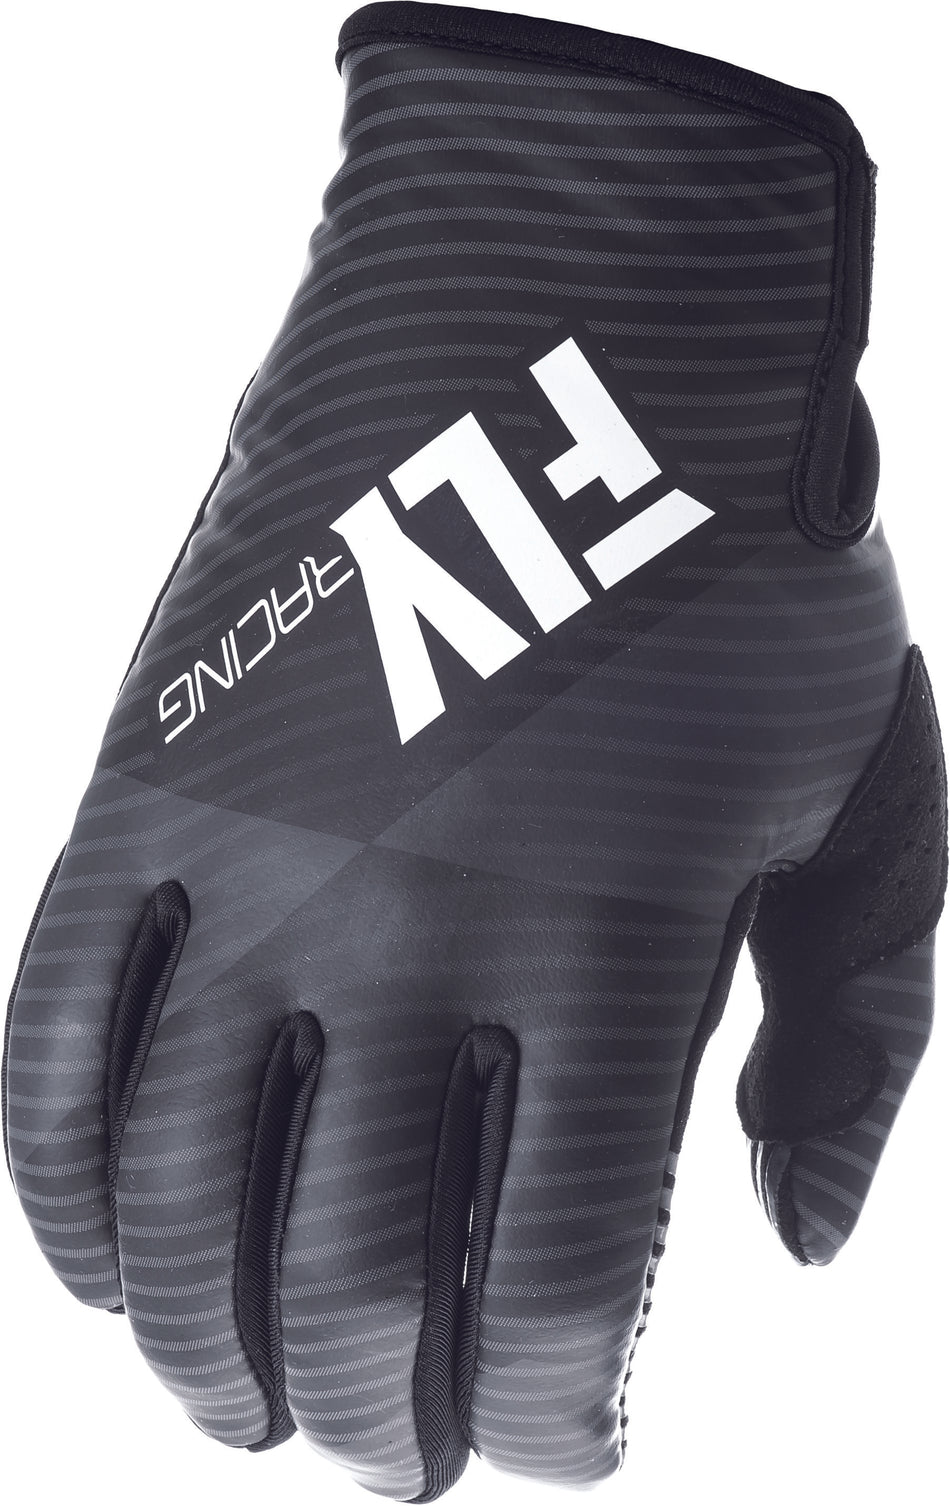 FLY RACING 907 Neoprene Gloves Black/Grey Sz 12 369-64012